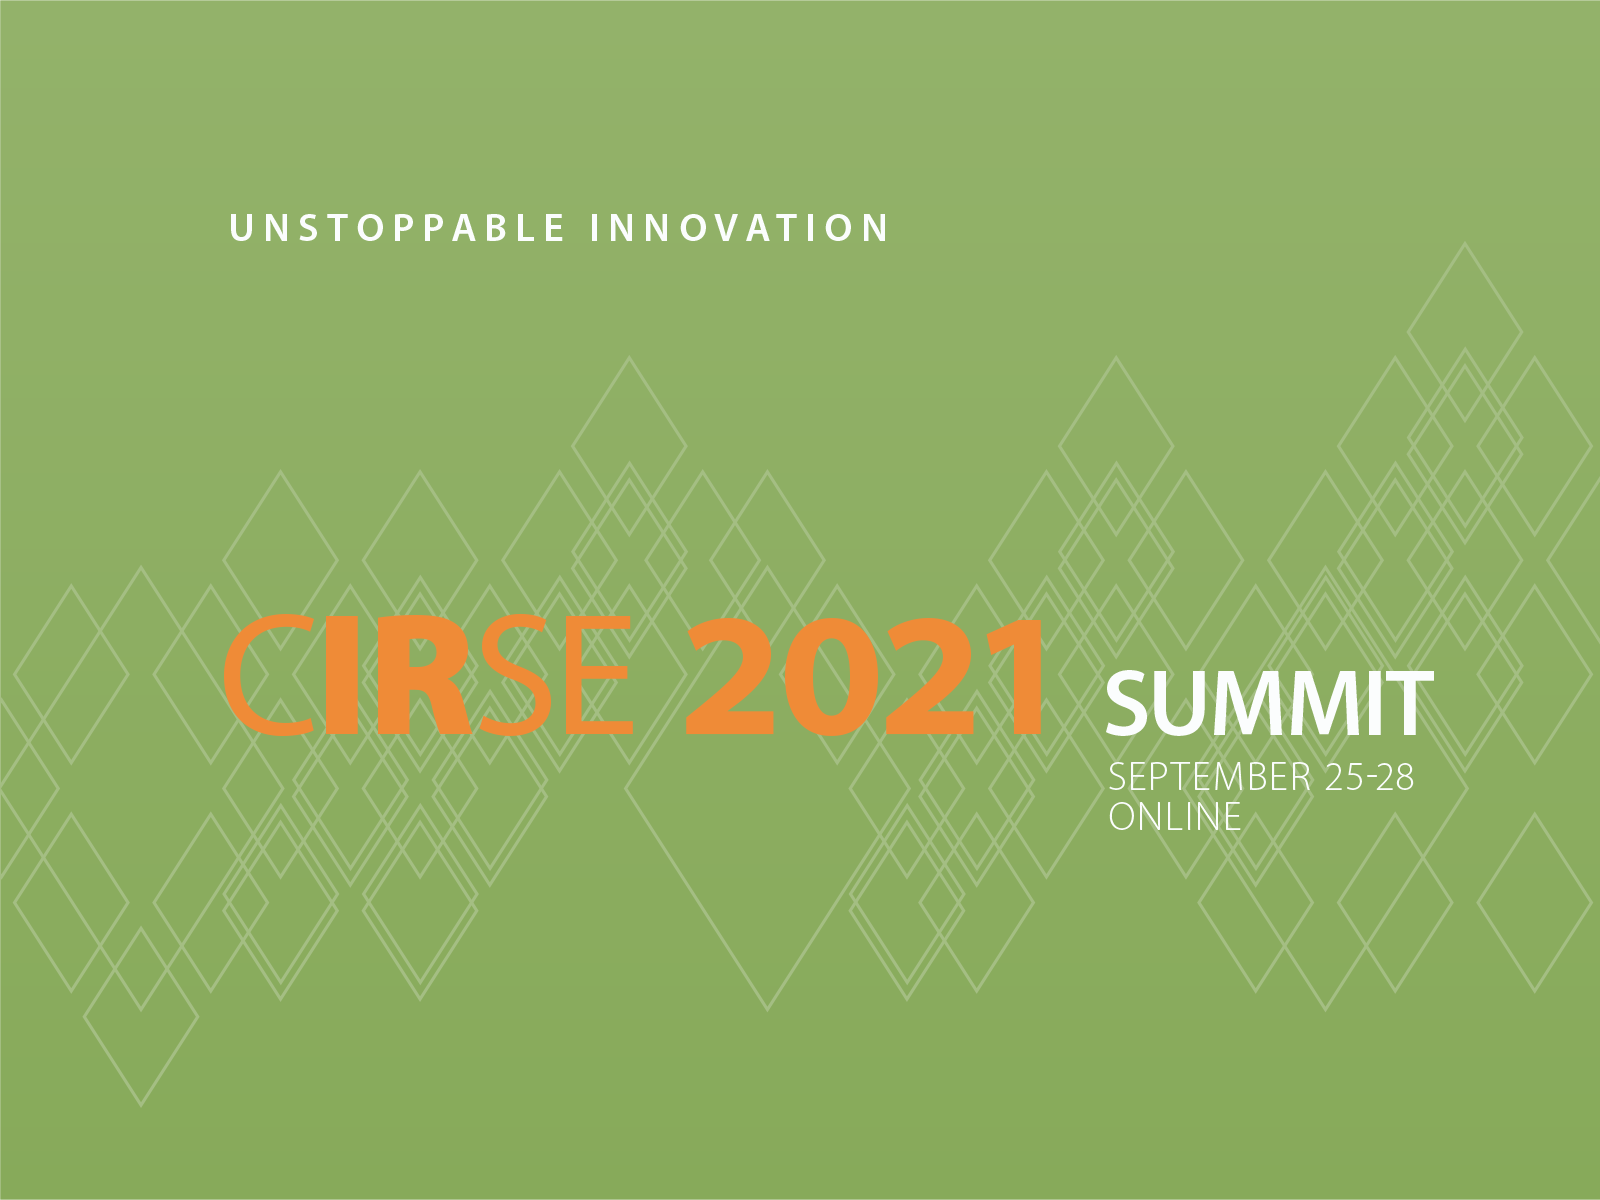 CIRSE 2021 Summit 25 a 28 Setembro 2021